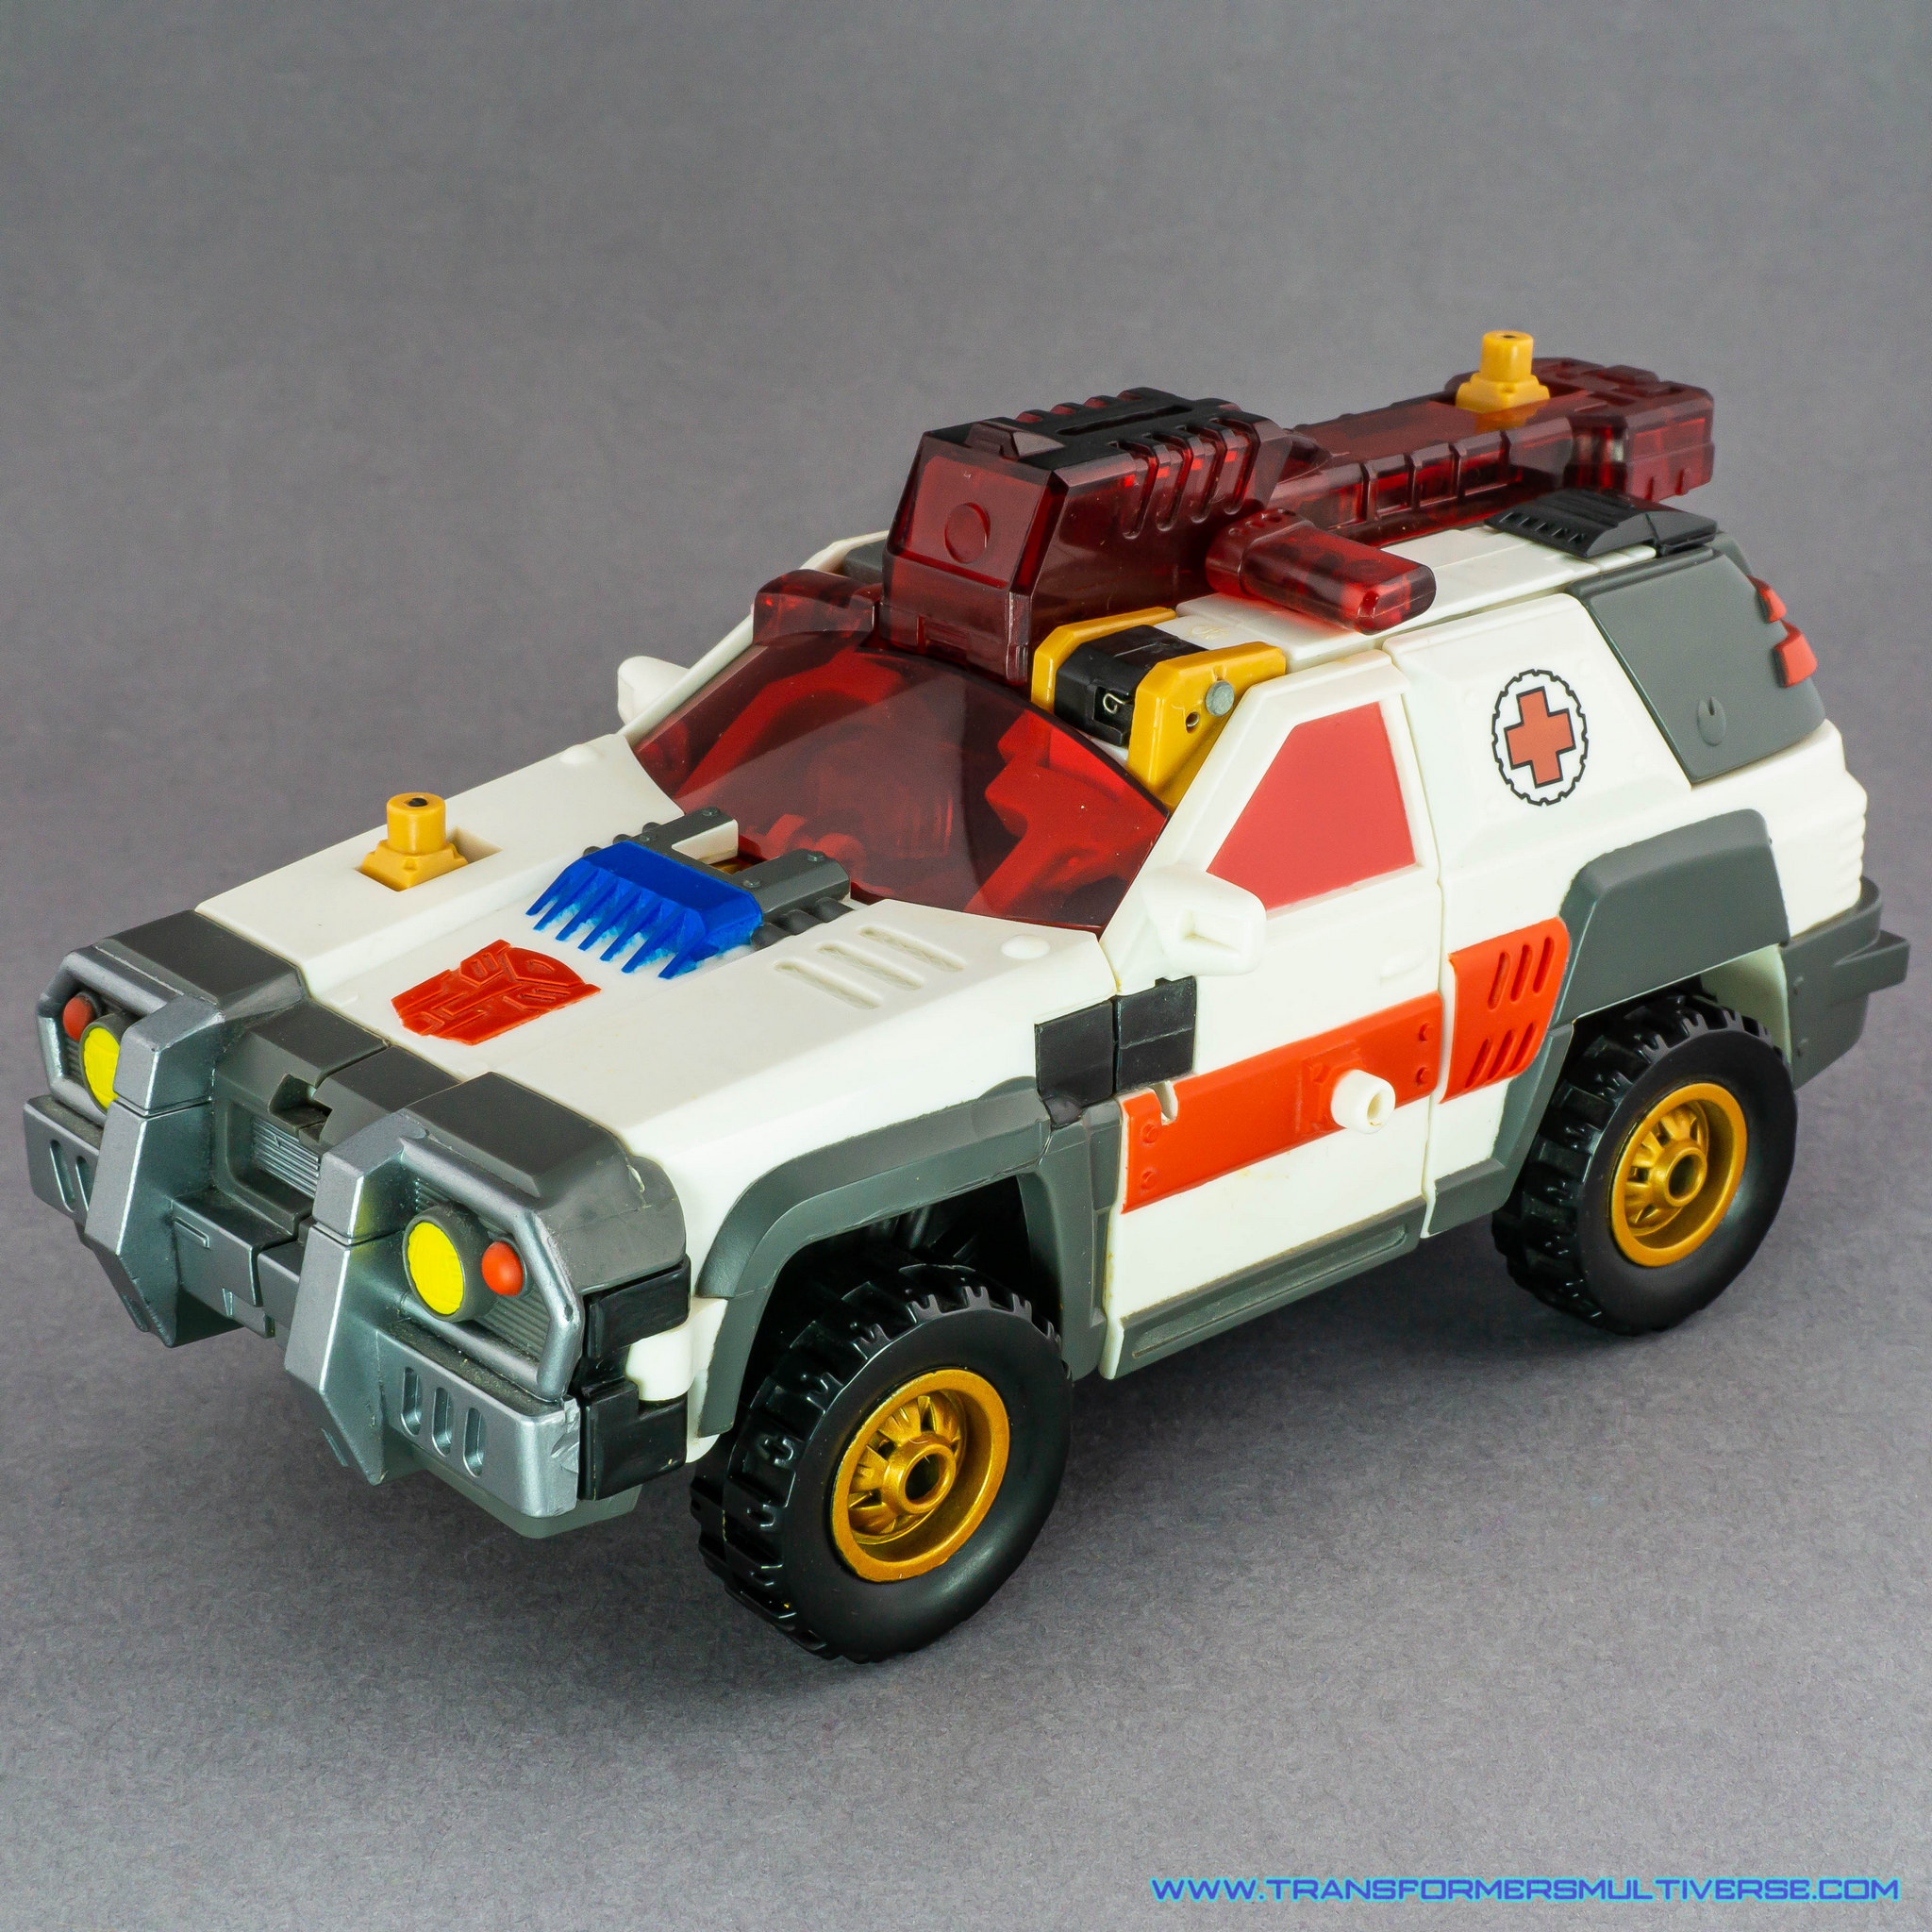 Transformers Armada Red Alert Nissan Patrol Rescue SUV mode alternate angle